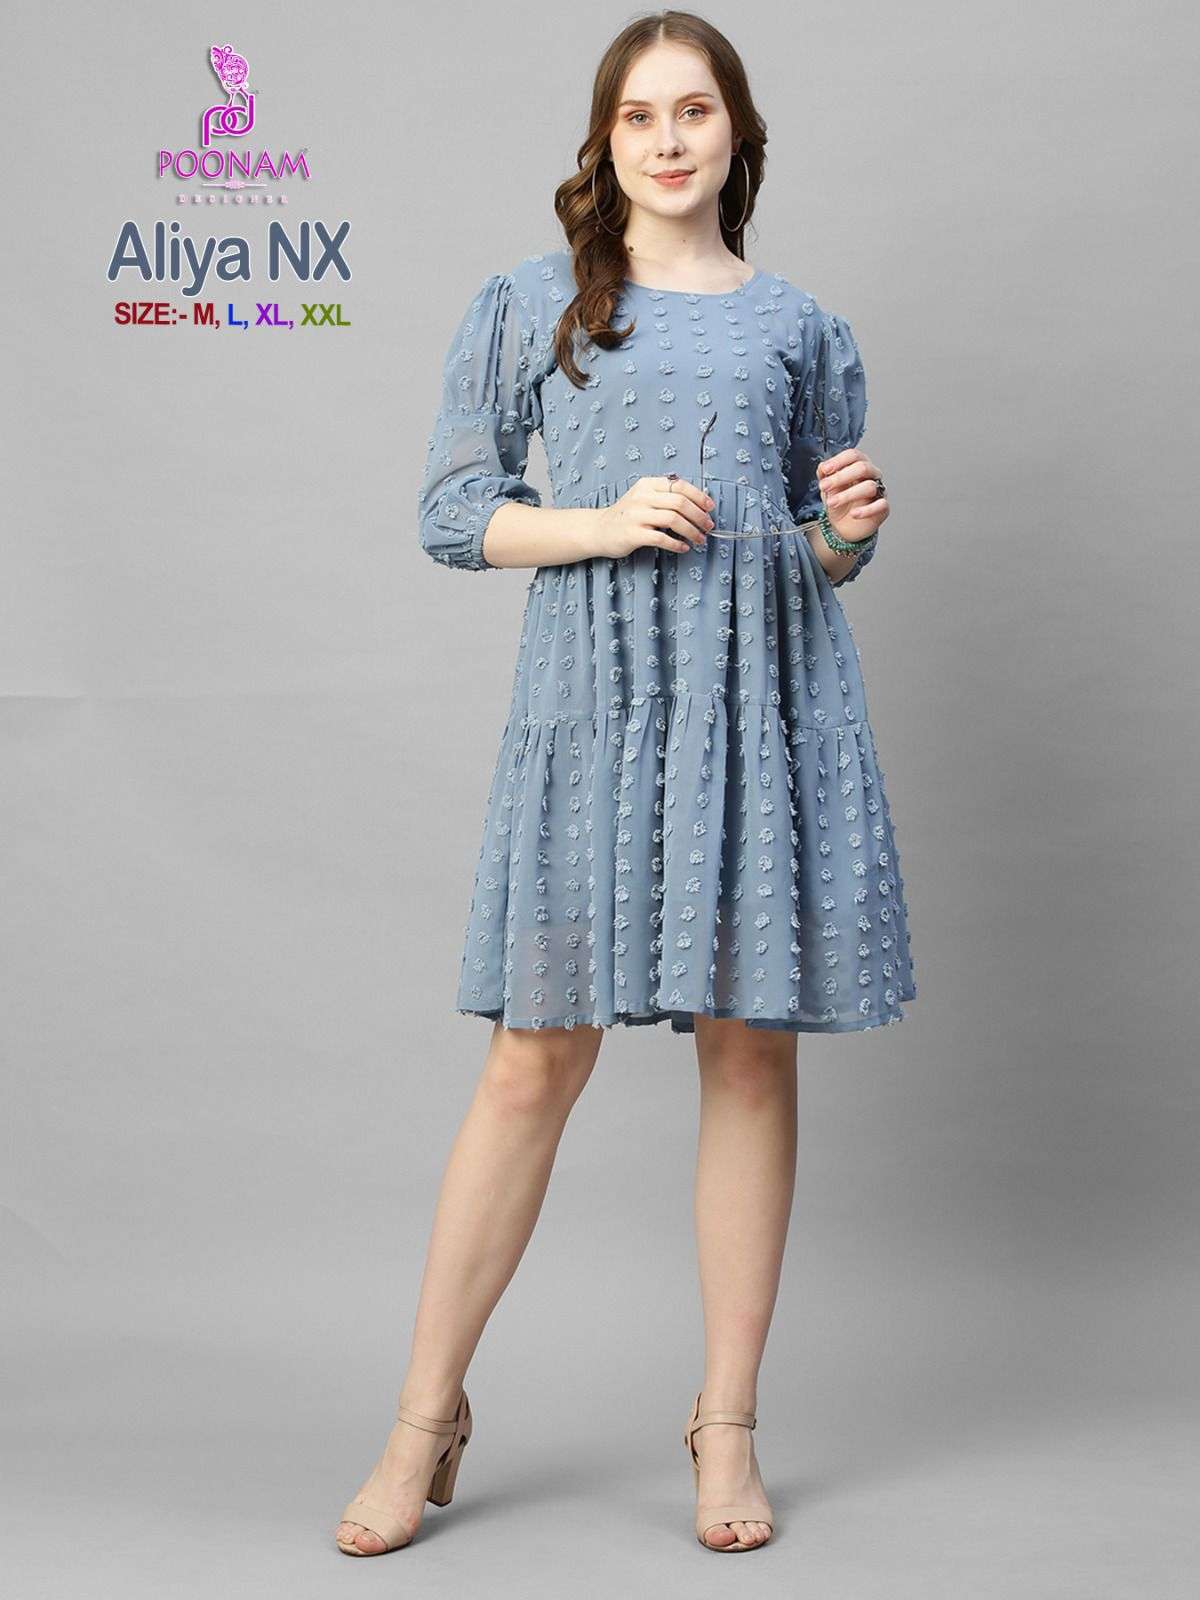 poonam designer aliya nx 1001-1006 series fancy short gown catalogue wholesaler surat 